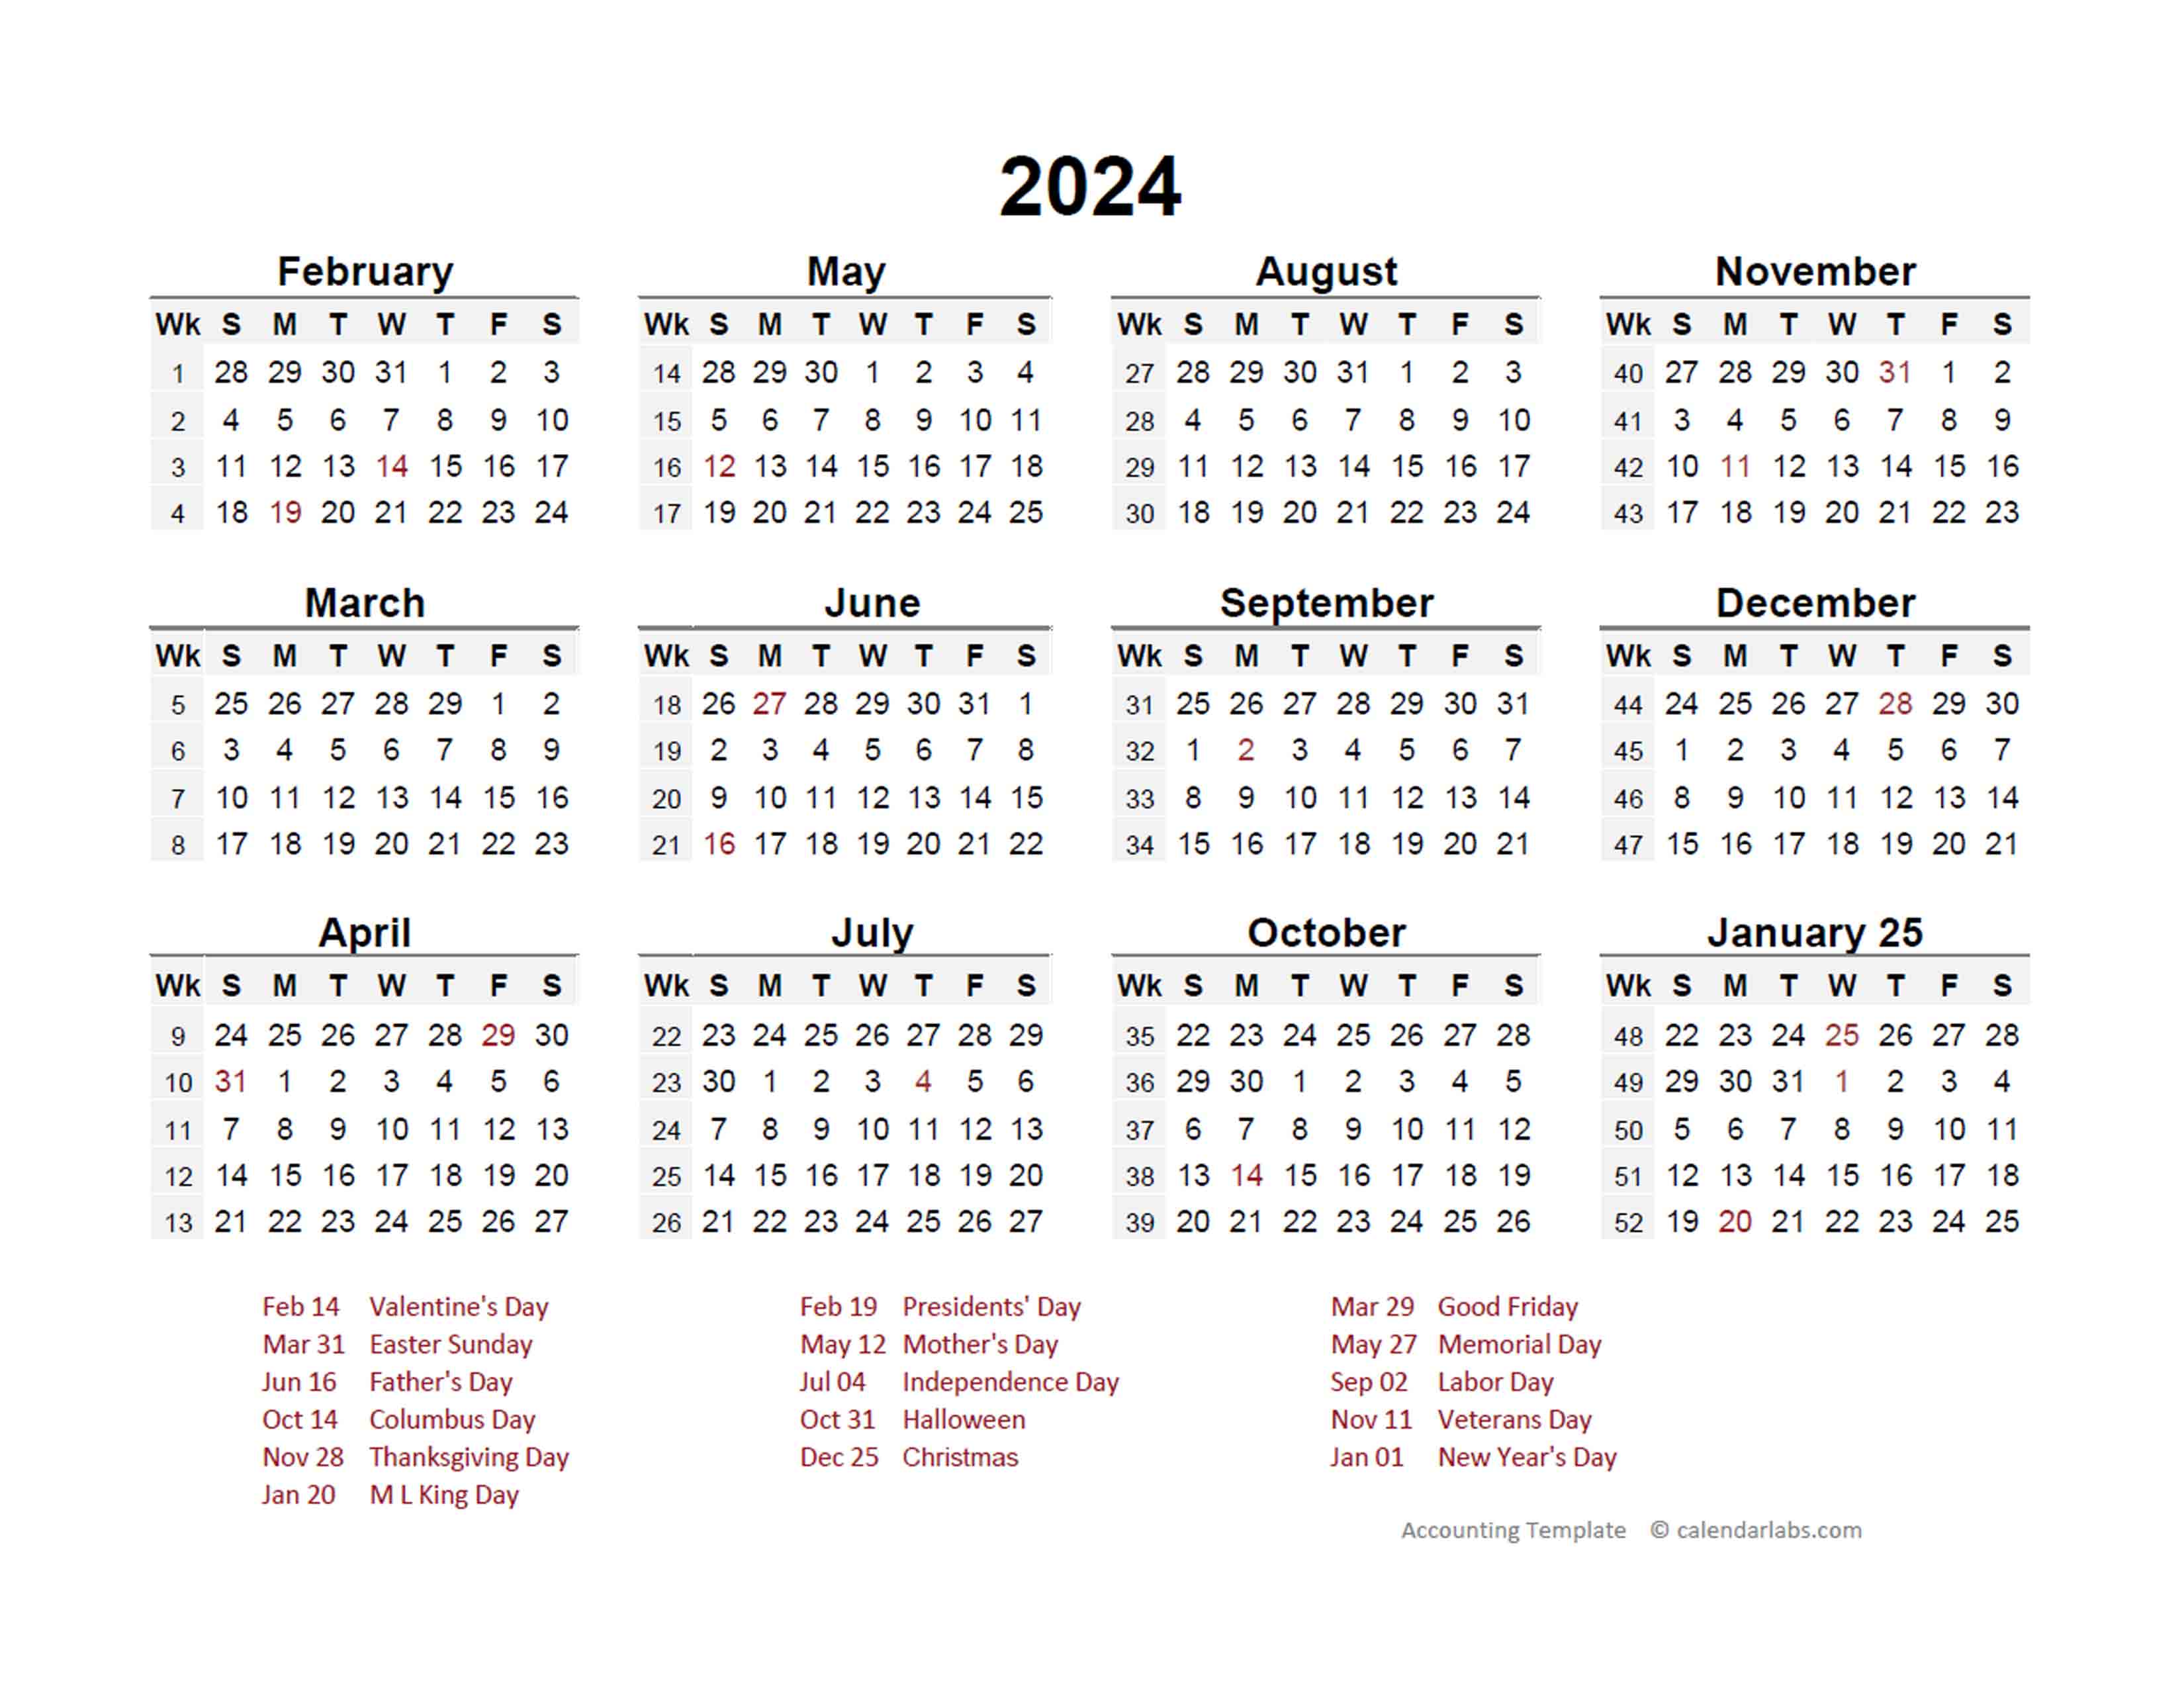 2024 Accounting Period Calendar 4-4-5 - Free Printable Templates